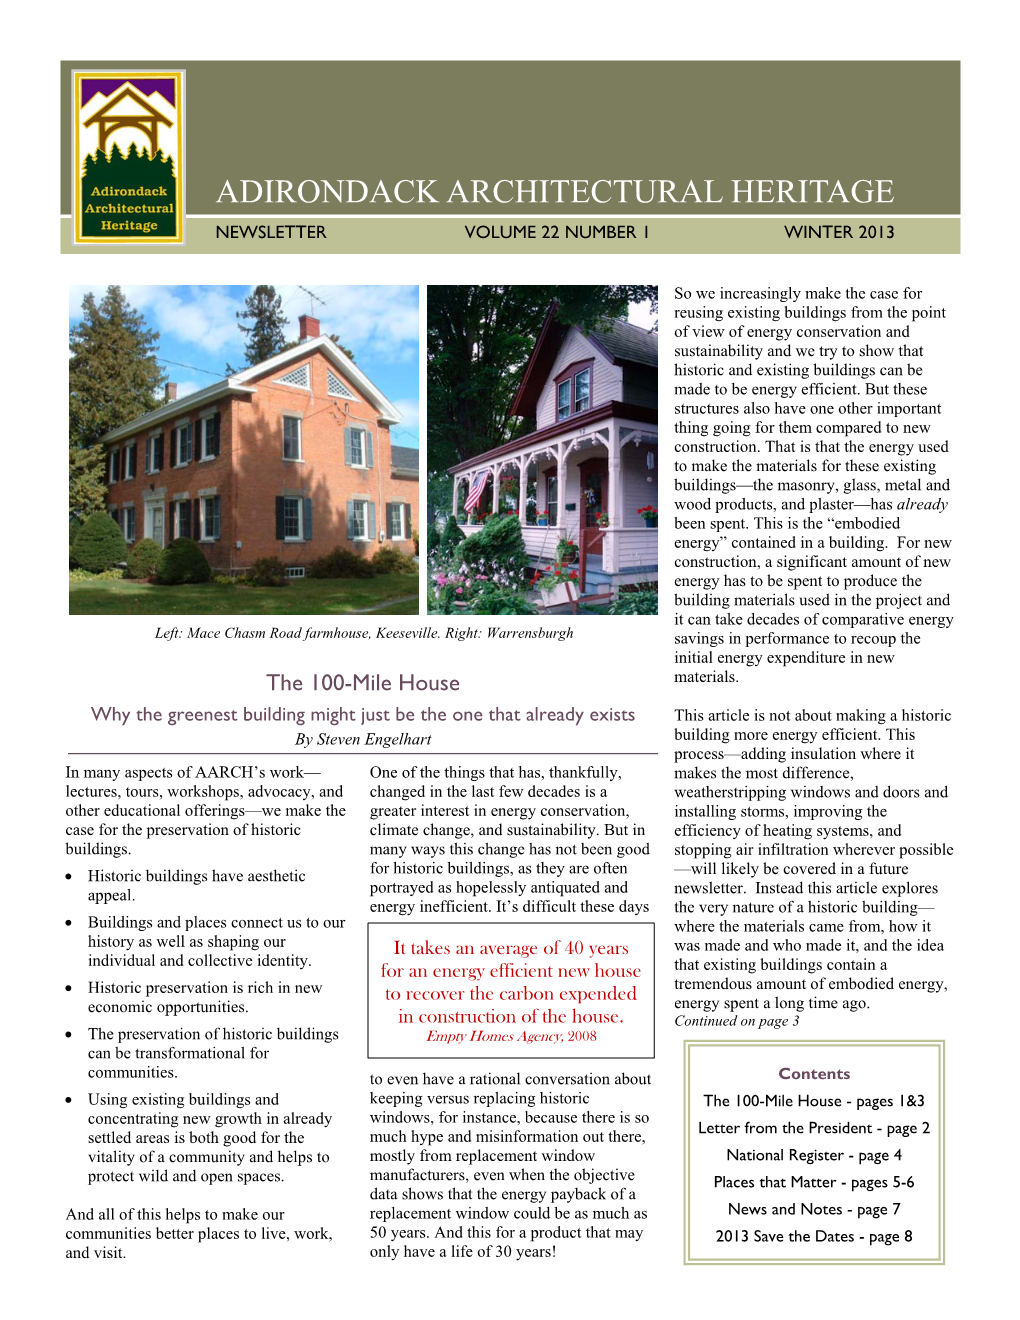 Adirondack Architectural Heritage Newsletter Volume 22 Number 1 Winter 2013